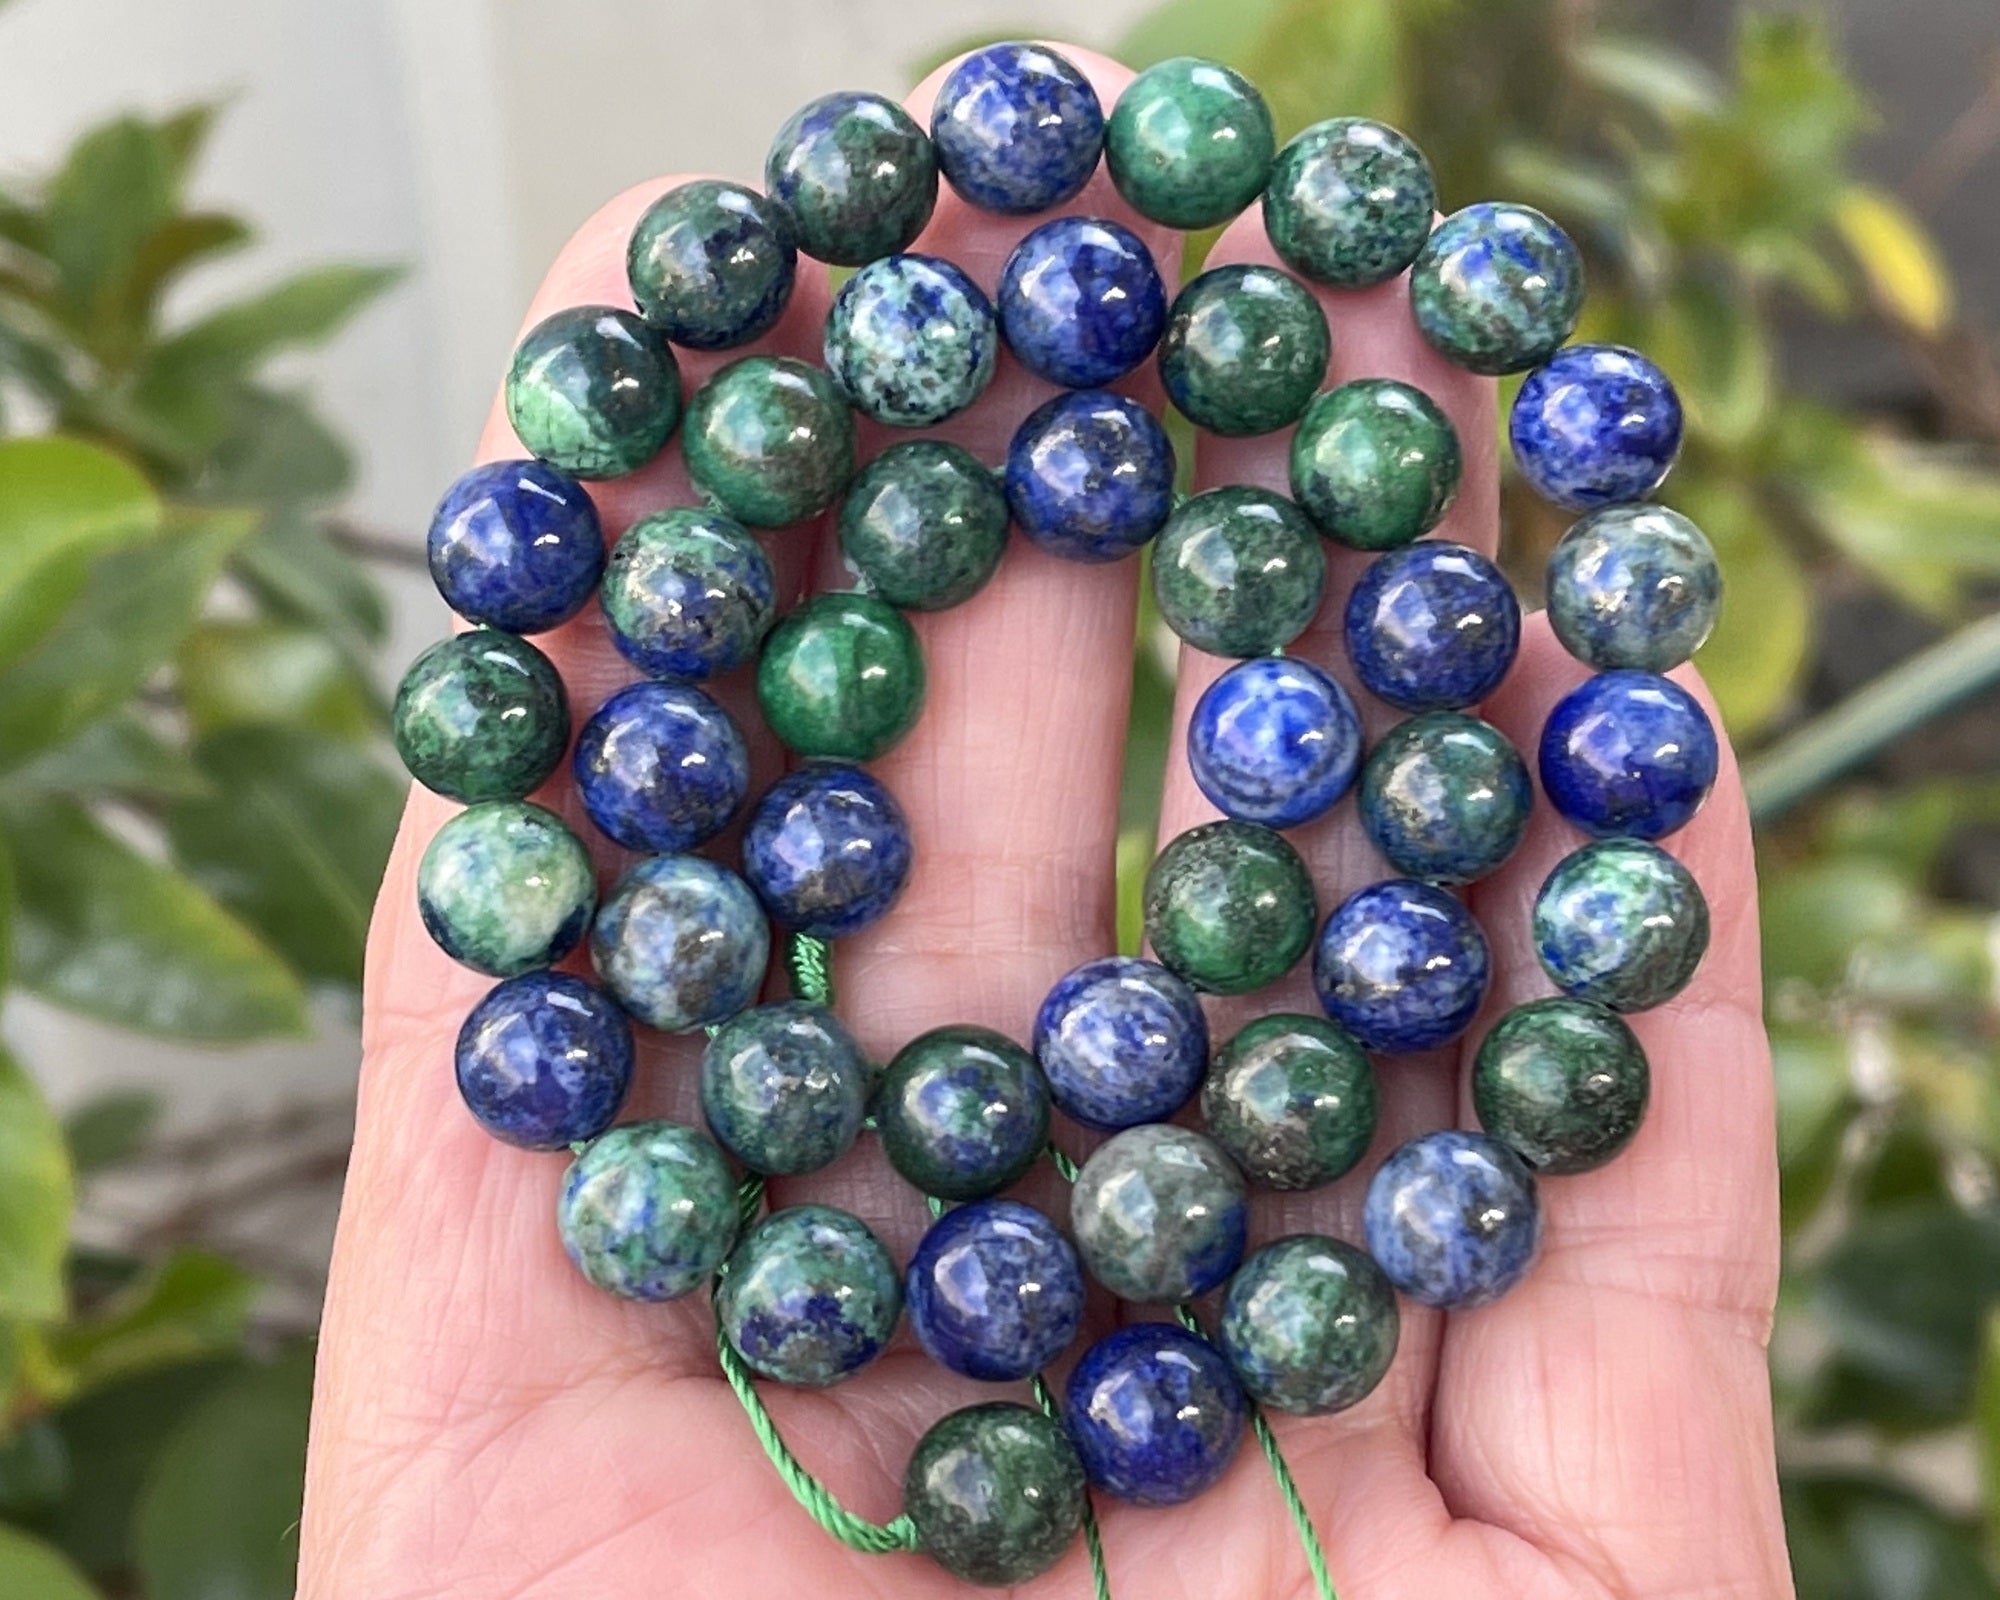 Chrysocolla Lapis Lazuli 8mm round polished beads 15.5" strand - Oz Beads 